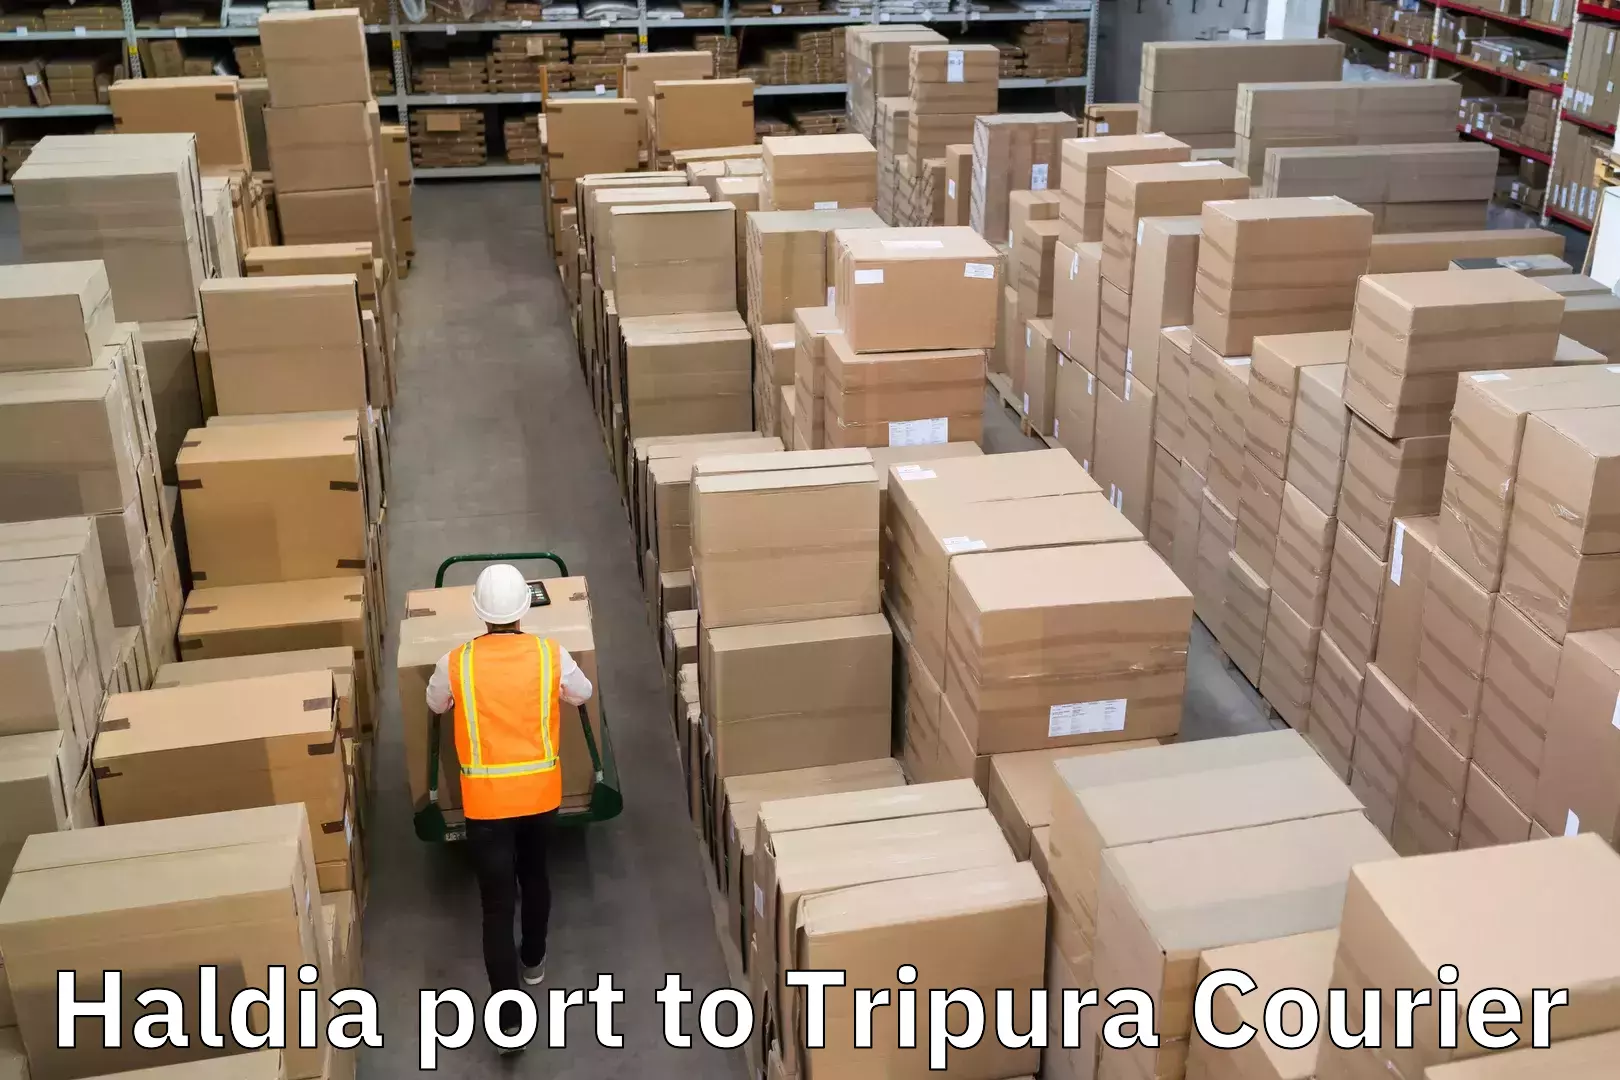 Courier tracking online Haldia port to Tripura